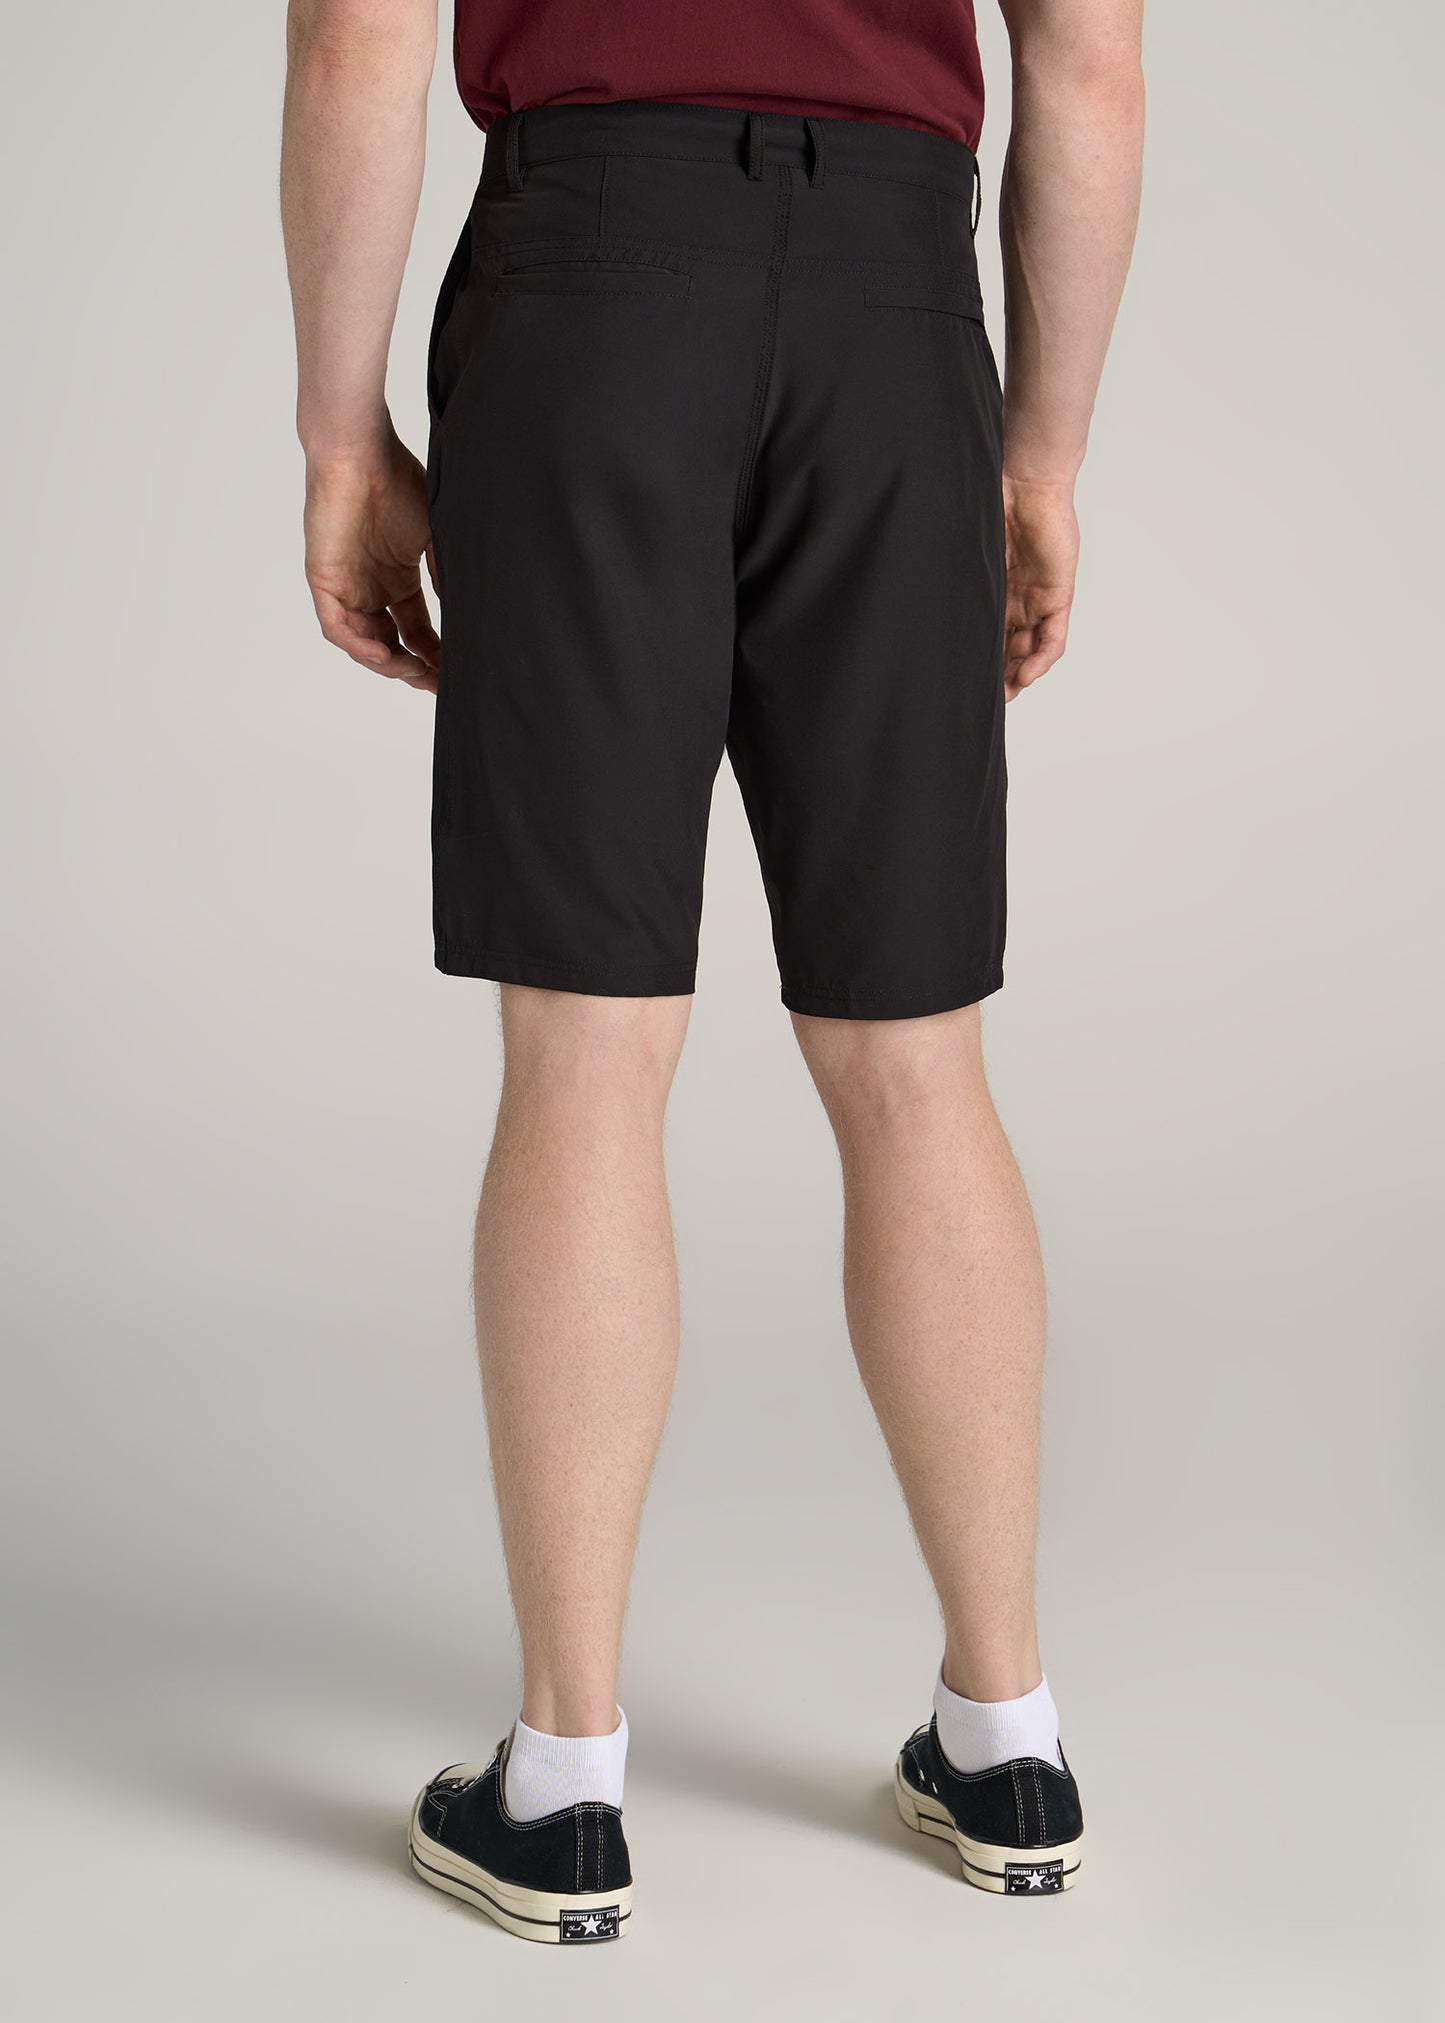       American-Tall-Men-Hybrid-Shorts-Shorts-Black-back